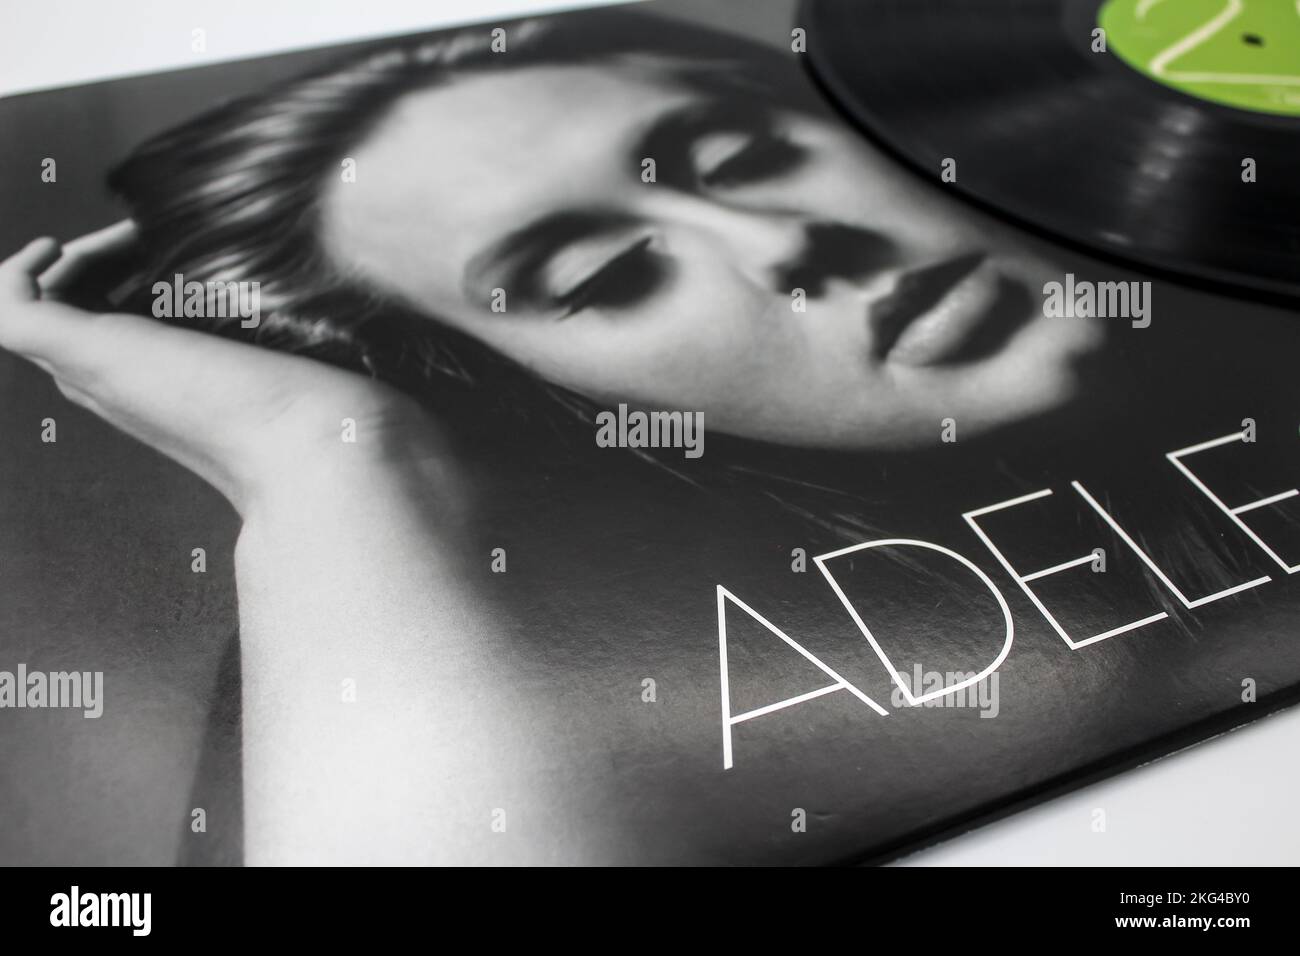 Adele 21 album player album fotografías e imágenes de alta resolución -  Alamy